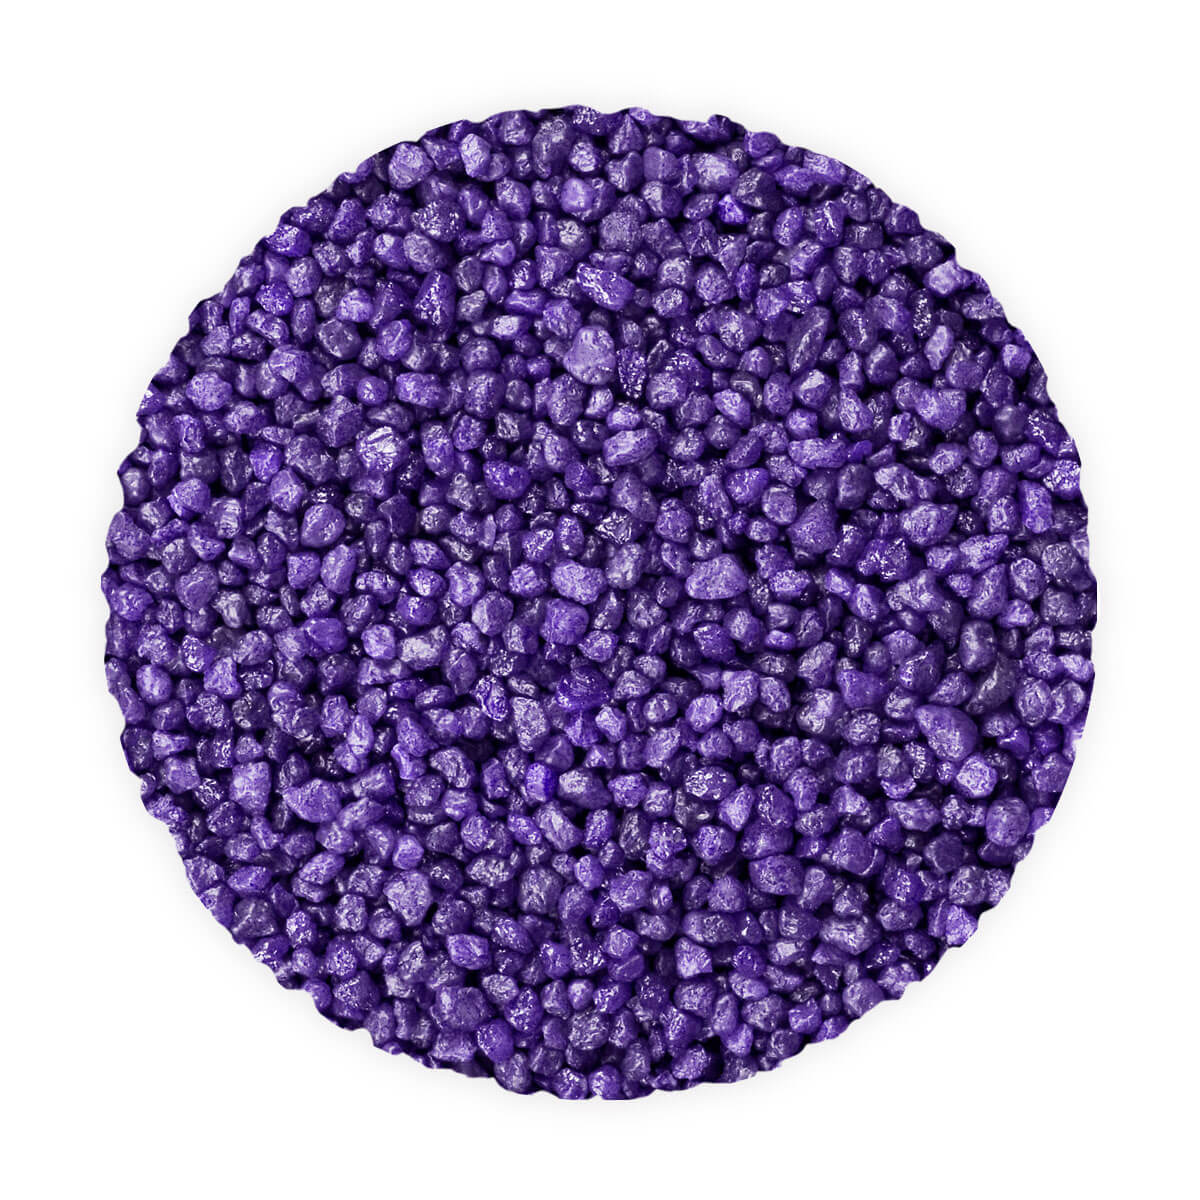 Deco-Granulat - violett - Packung à 1 kg